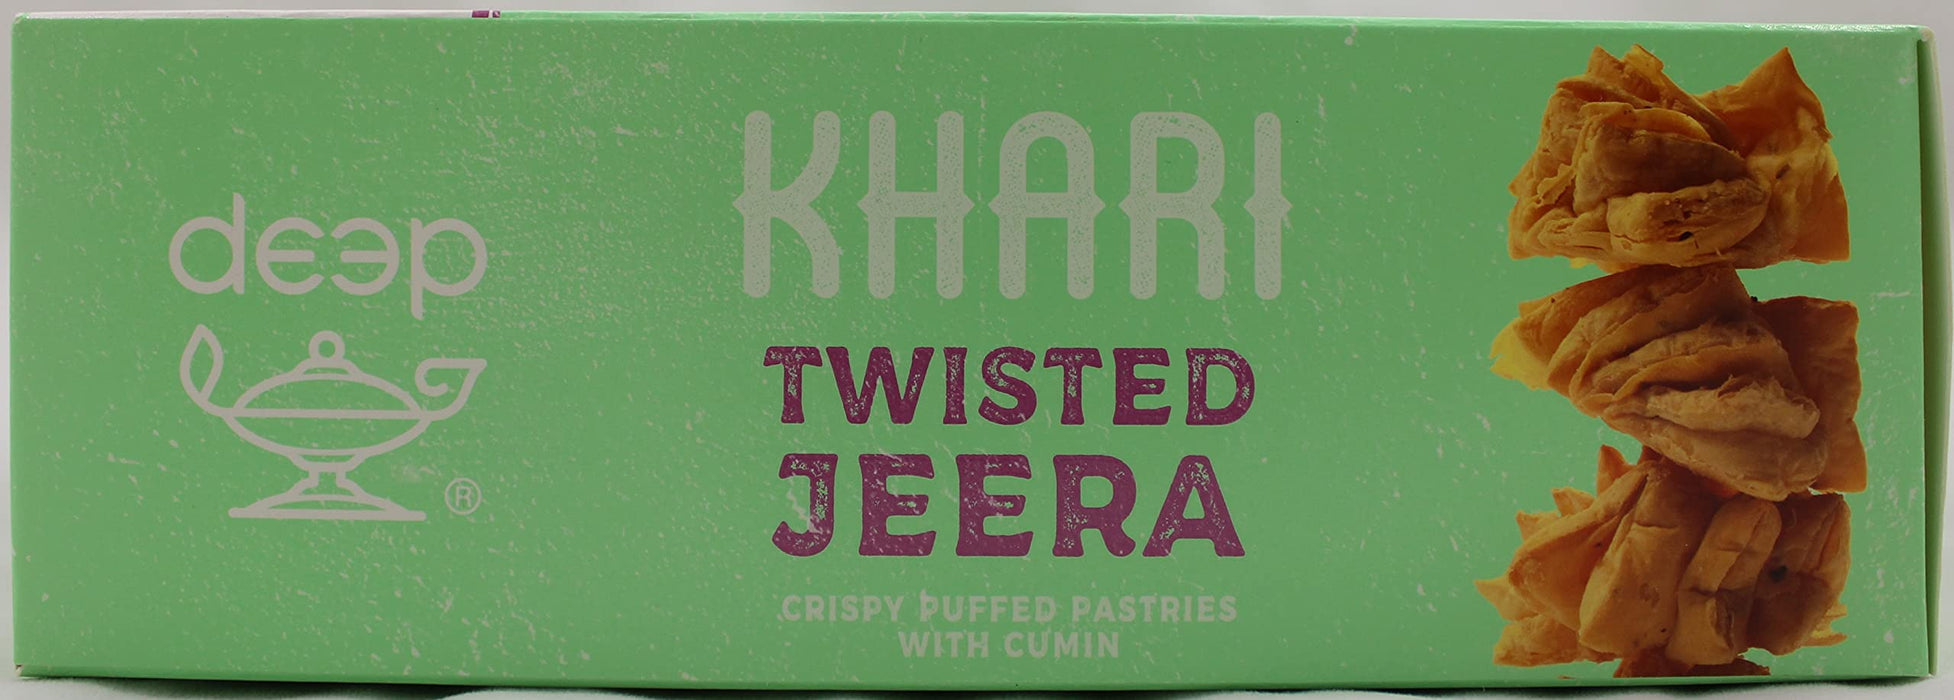 Deep- Twisted Jeera Khari Puff Pastry 200 gms